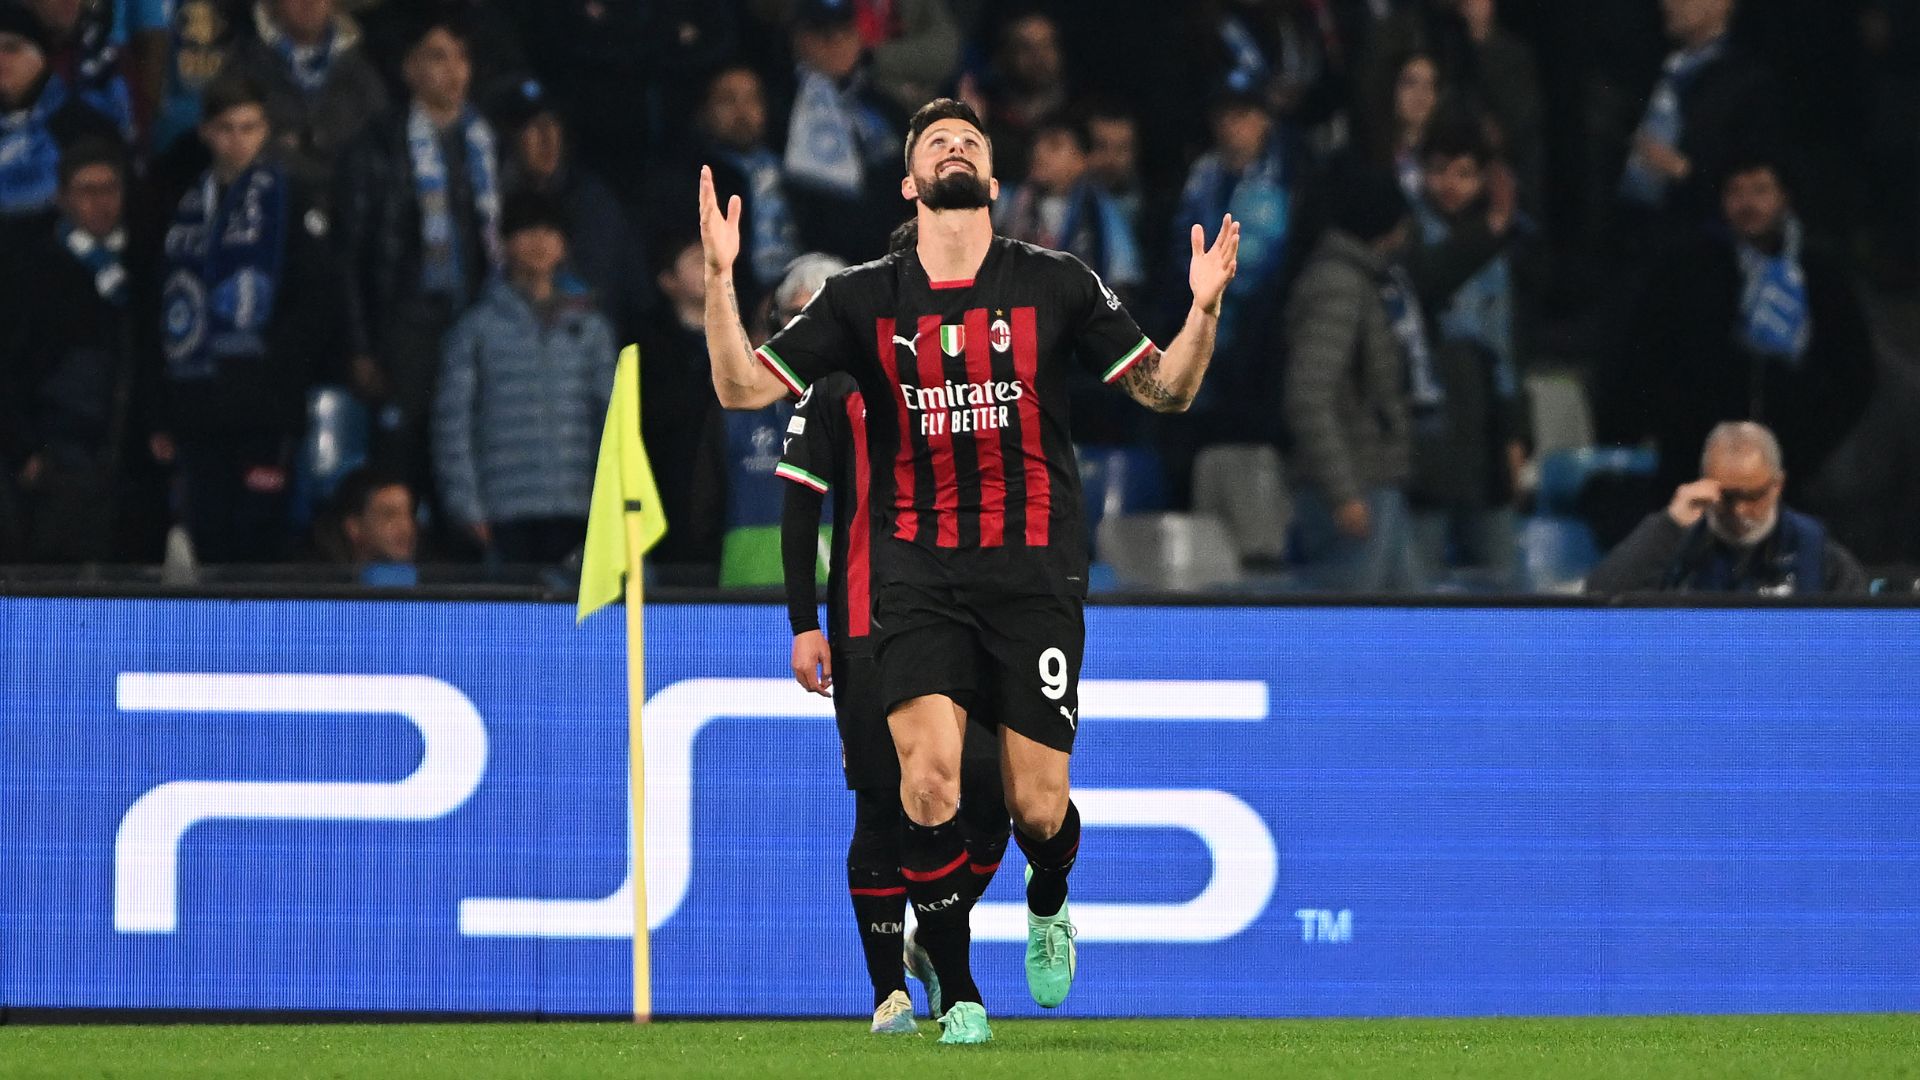 Giroud comemorando gol marcado contra o Napoli (Crédito: Getty Images)